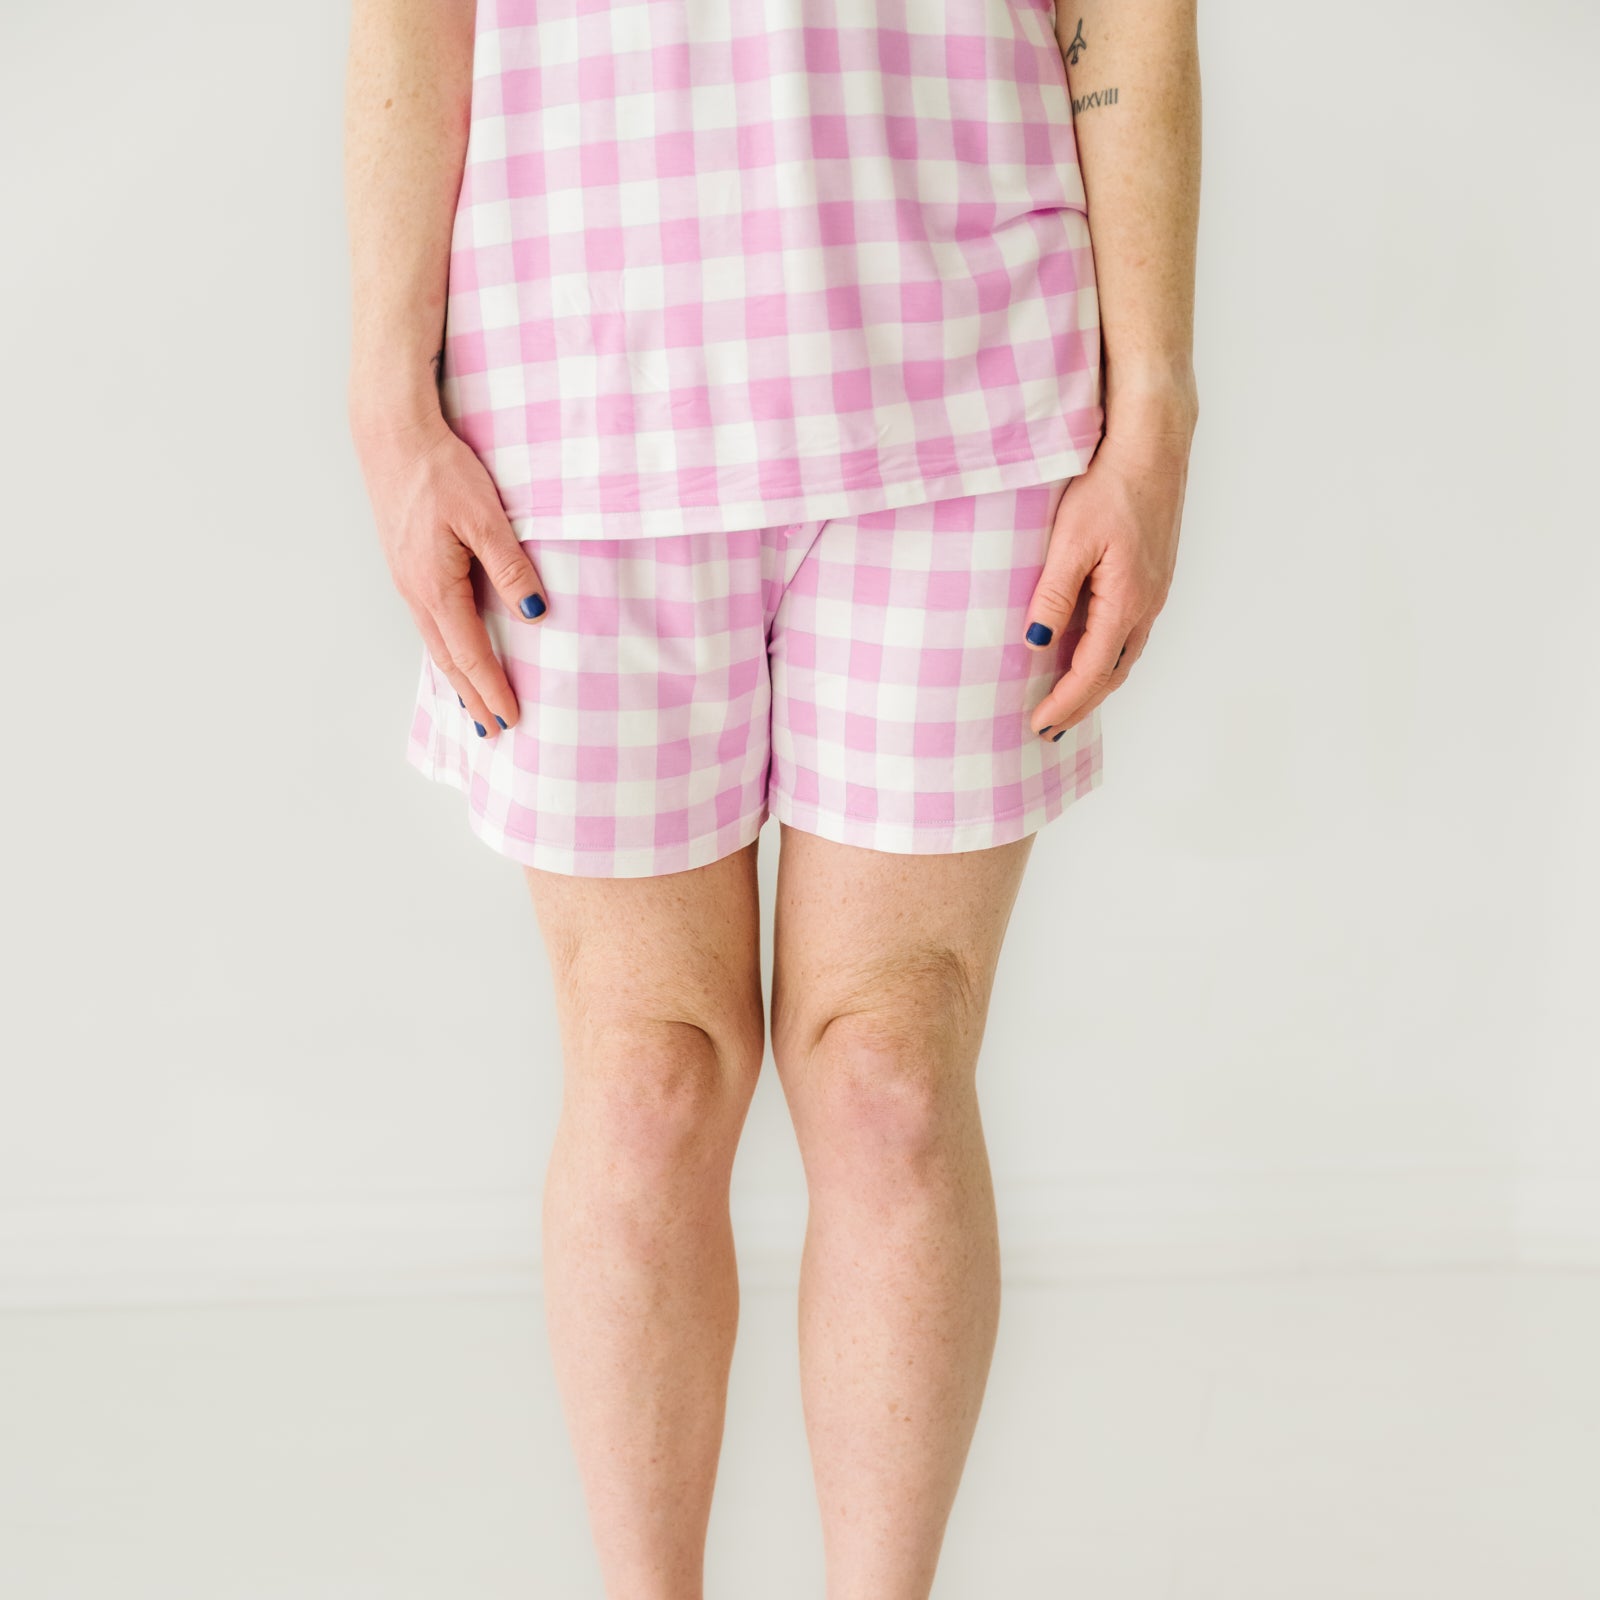 Close up image of a woman wearing Pink Gingham pajama shorts